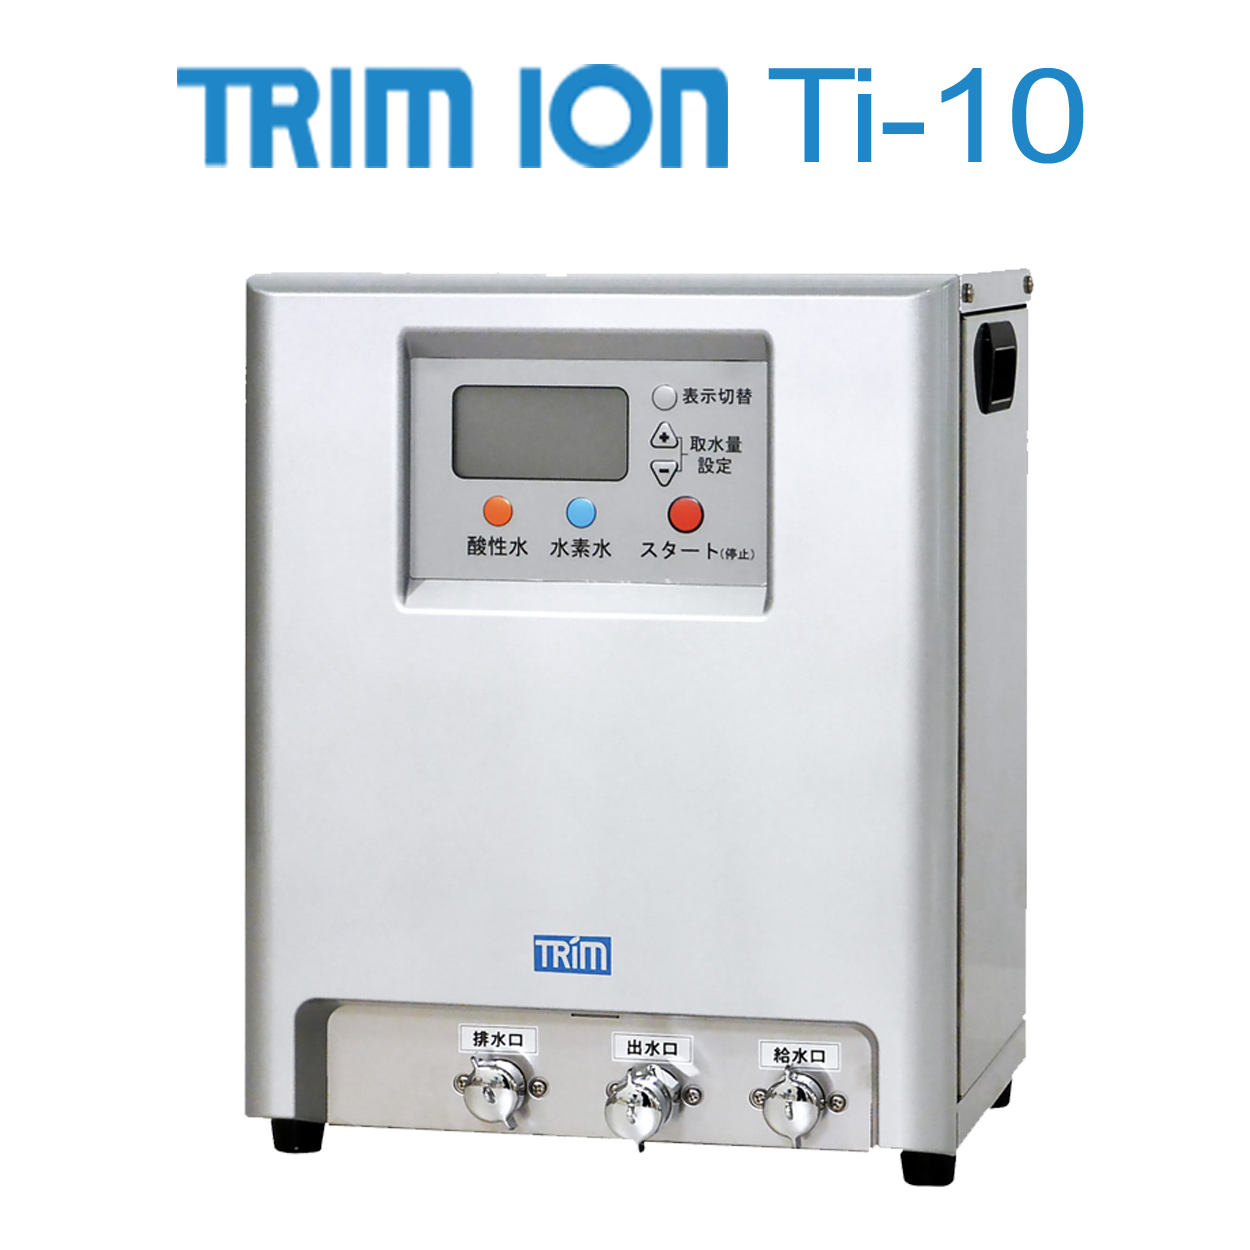 trim-ion-ti-10